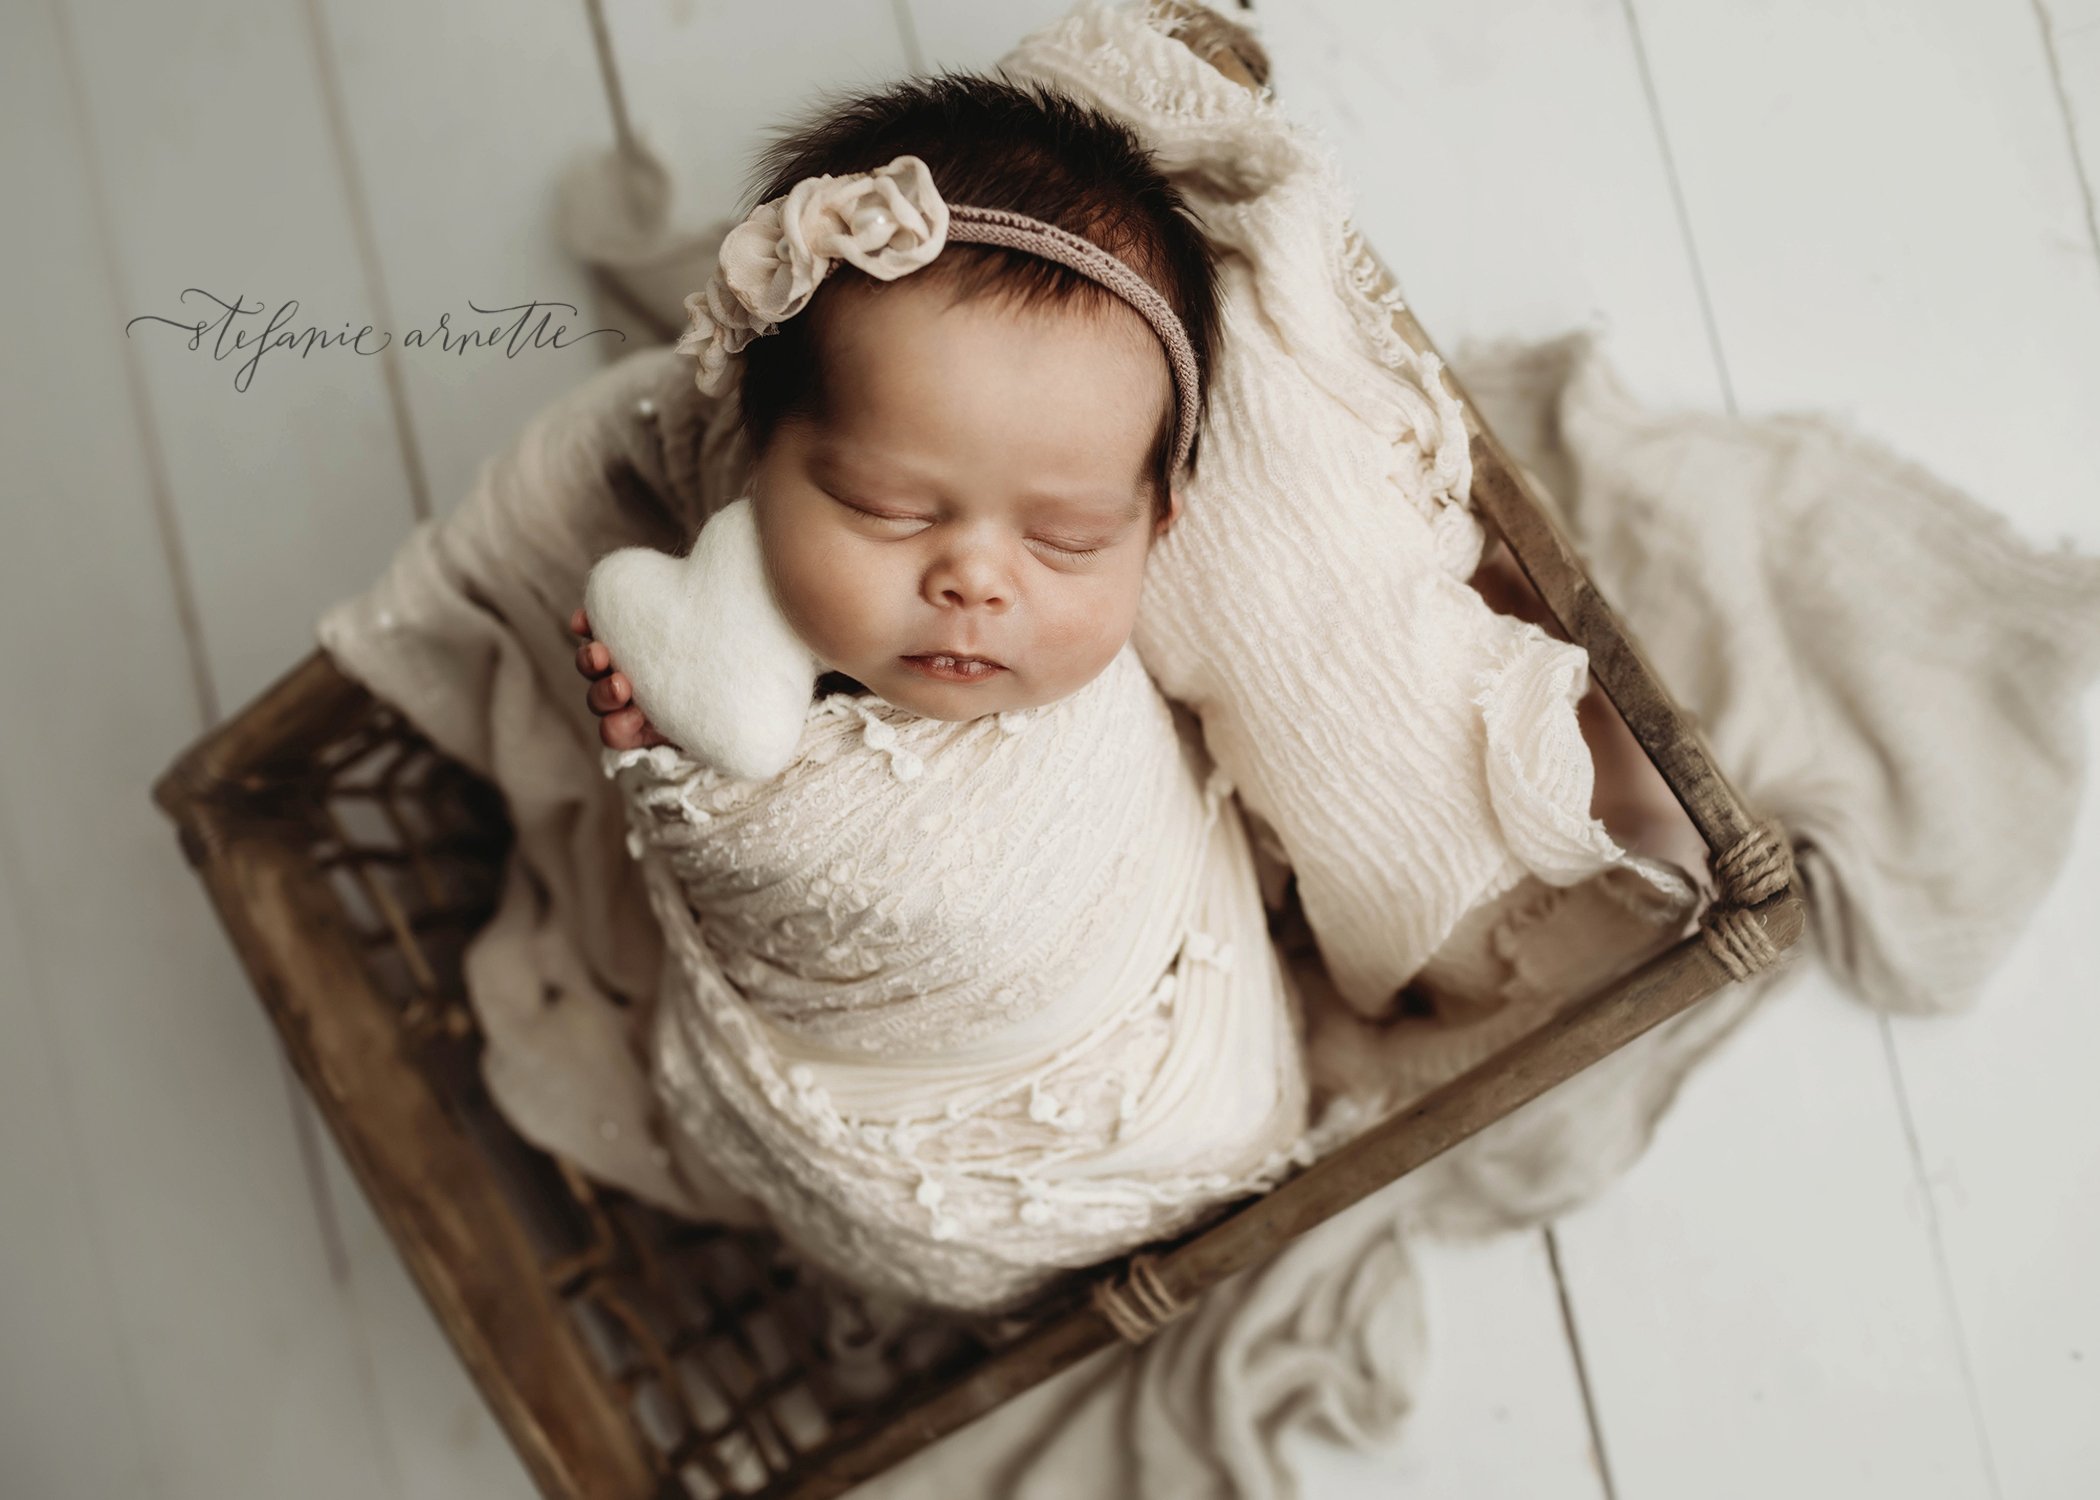 carrollton newborn photographer, baby portraits carrollton ga, baby photography packages